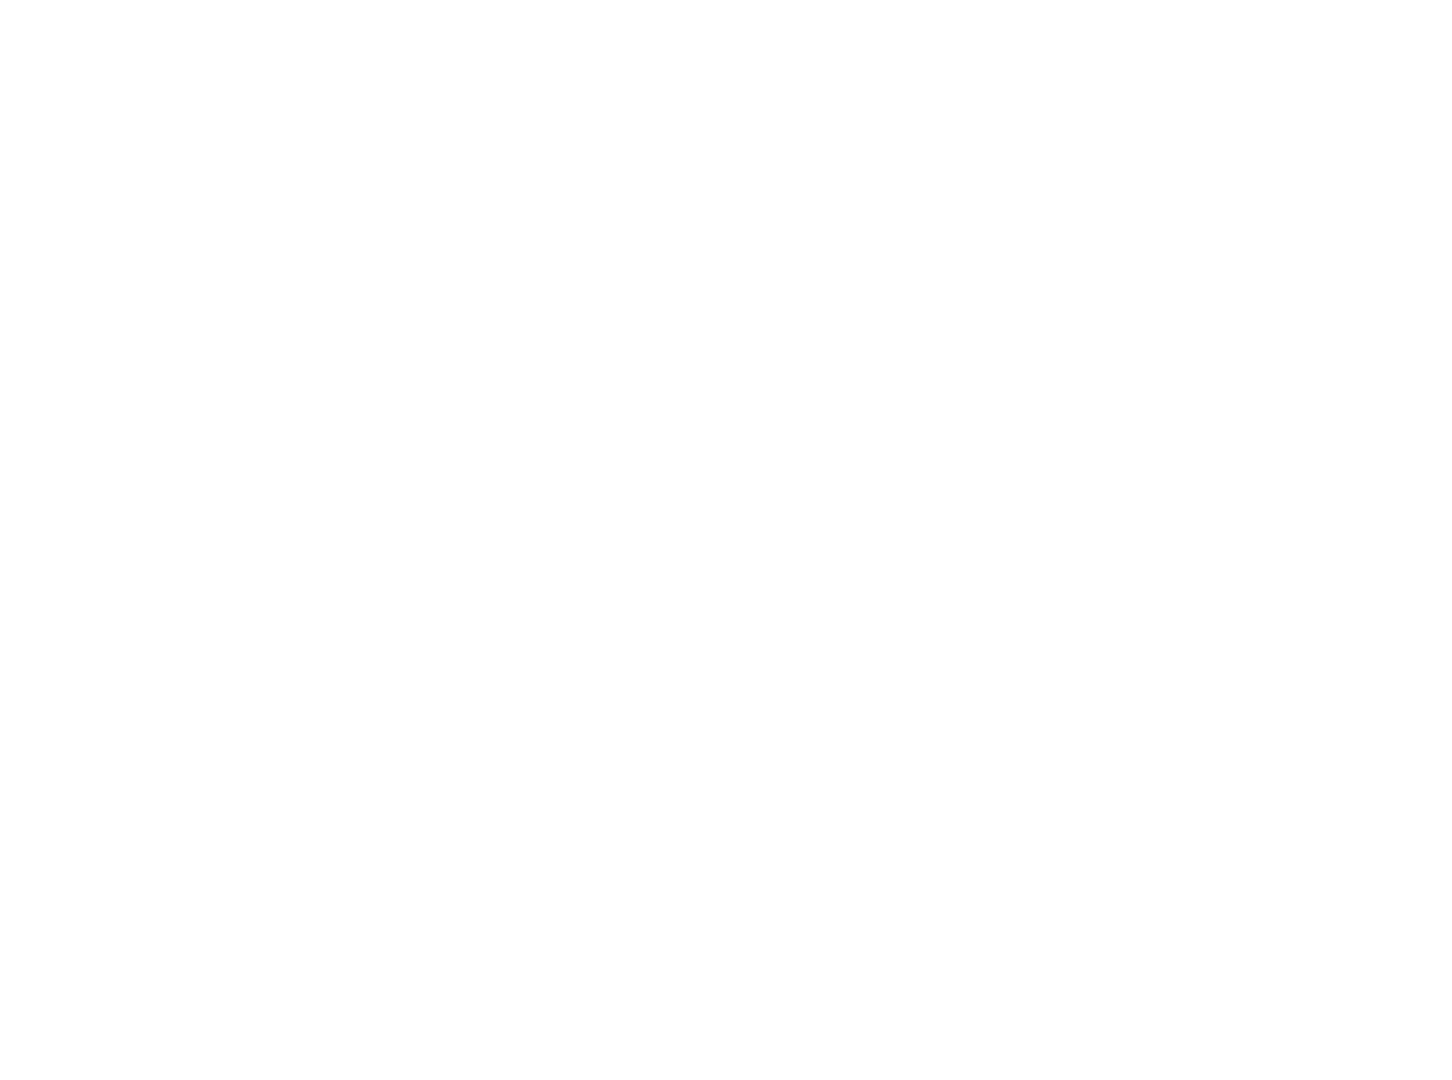 Cooksburg Cafe